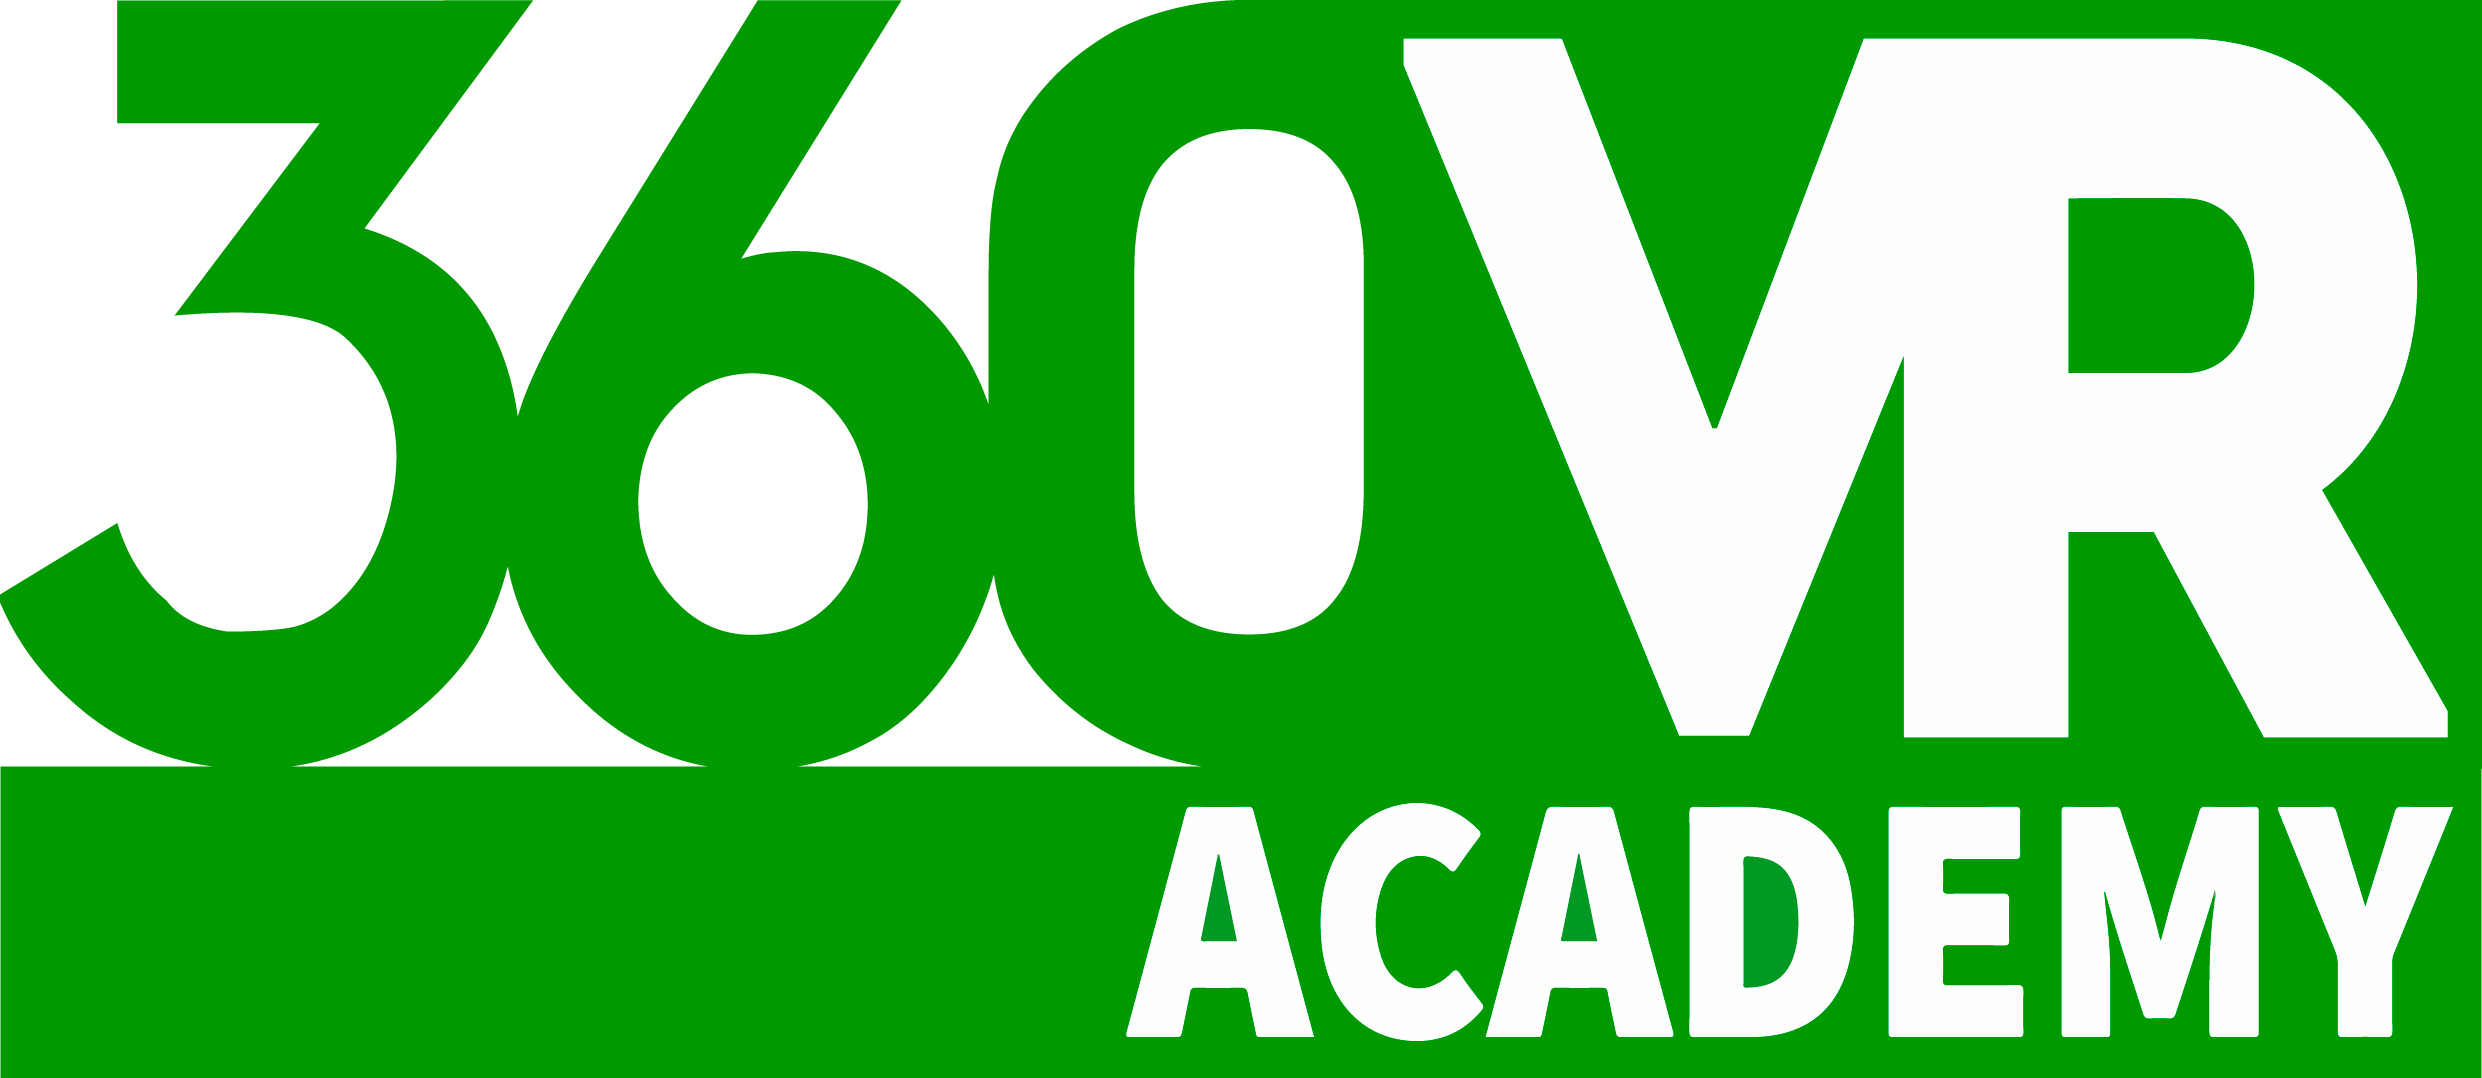 360VR Academy